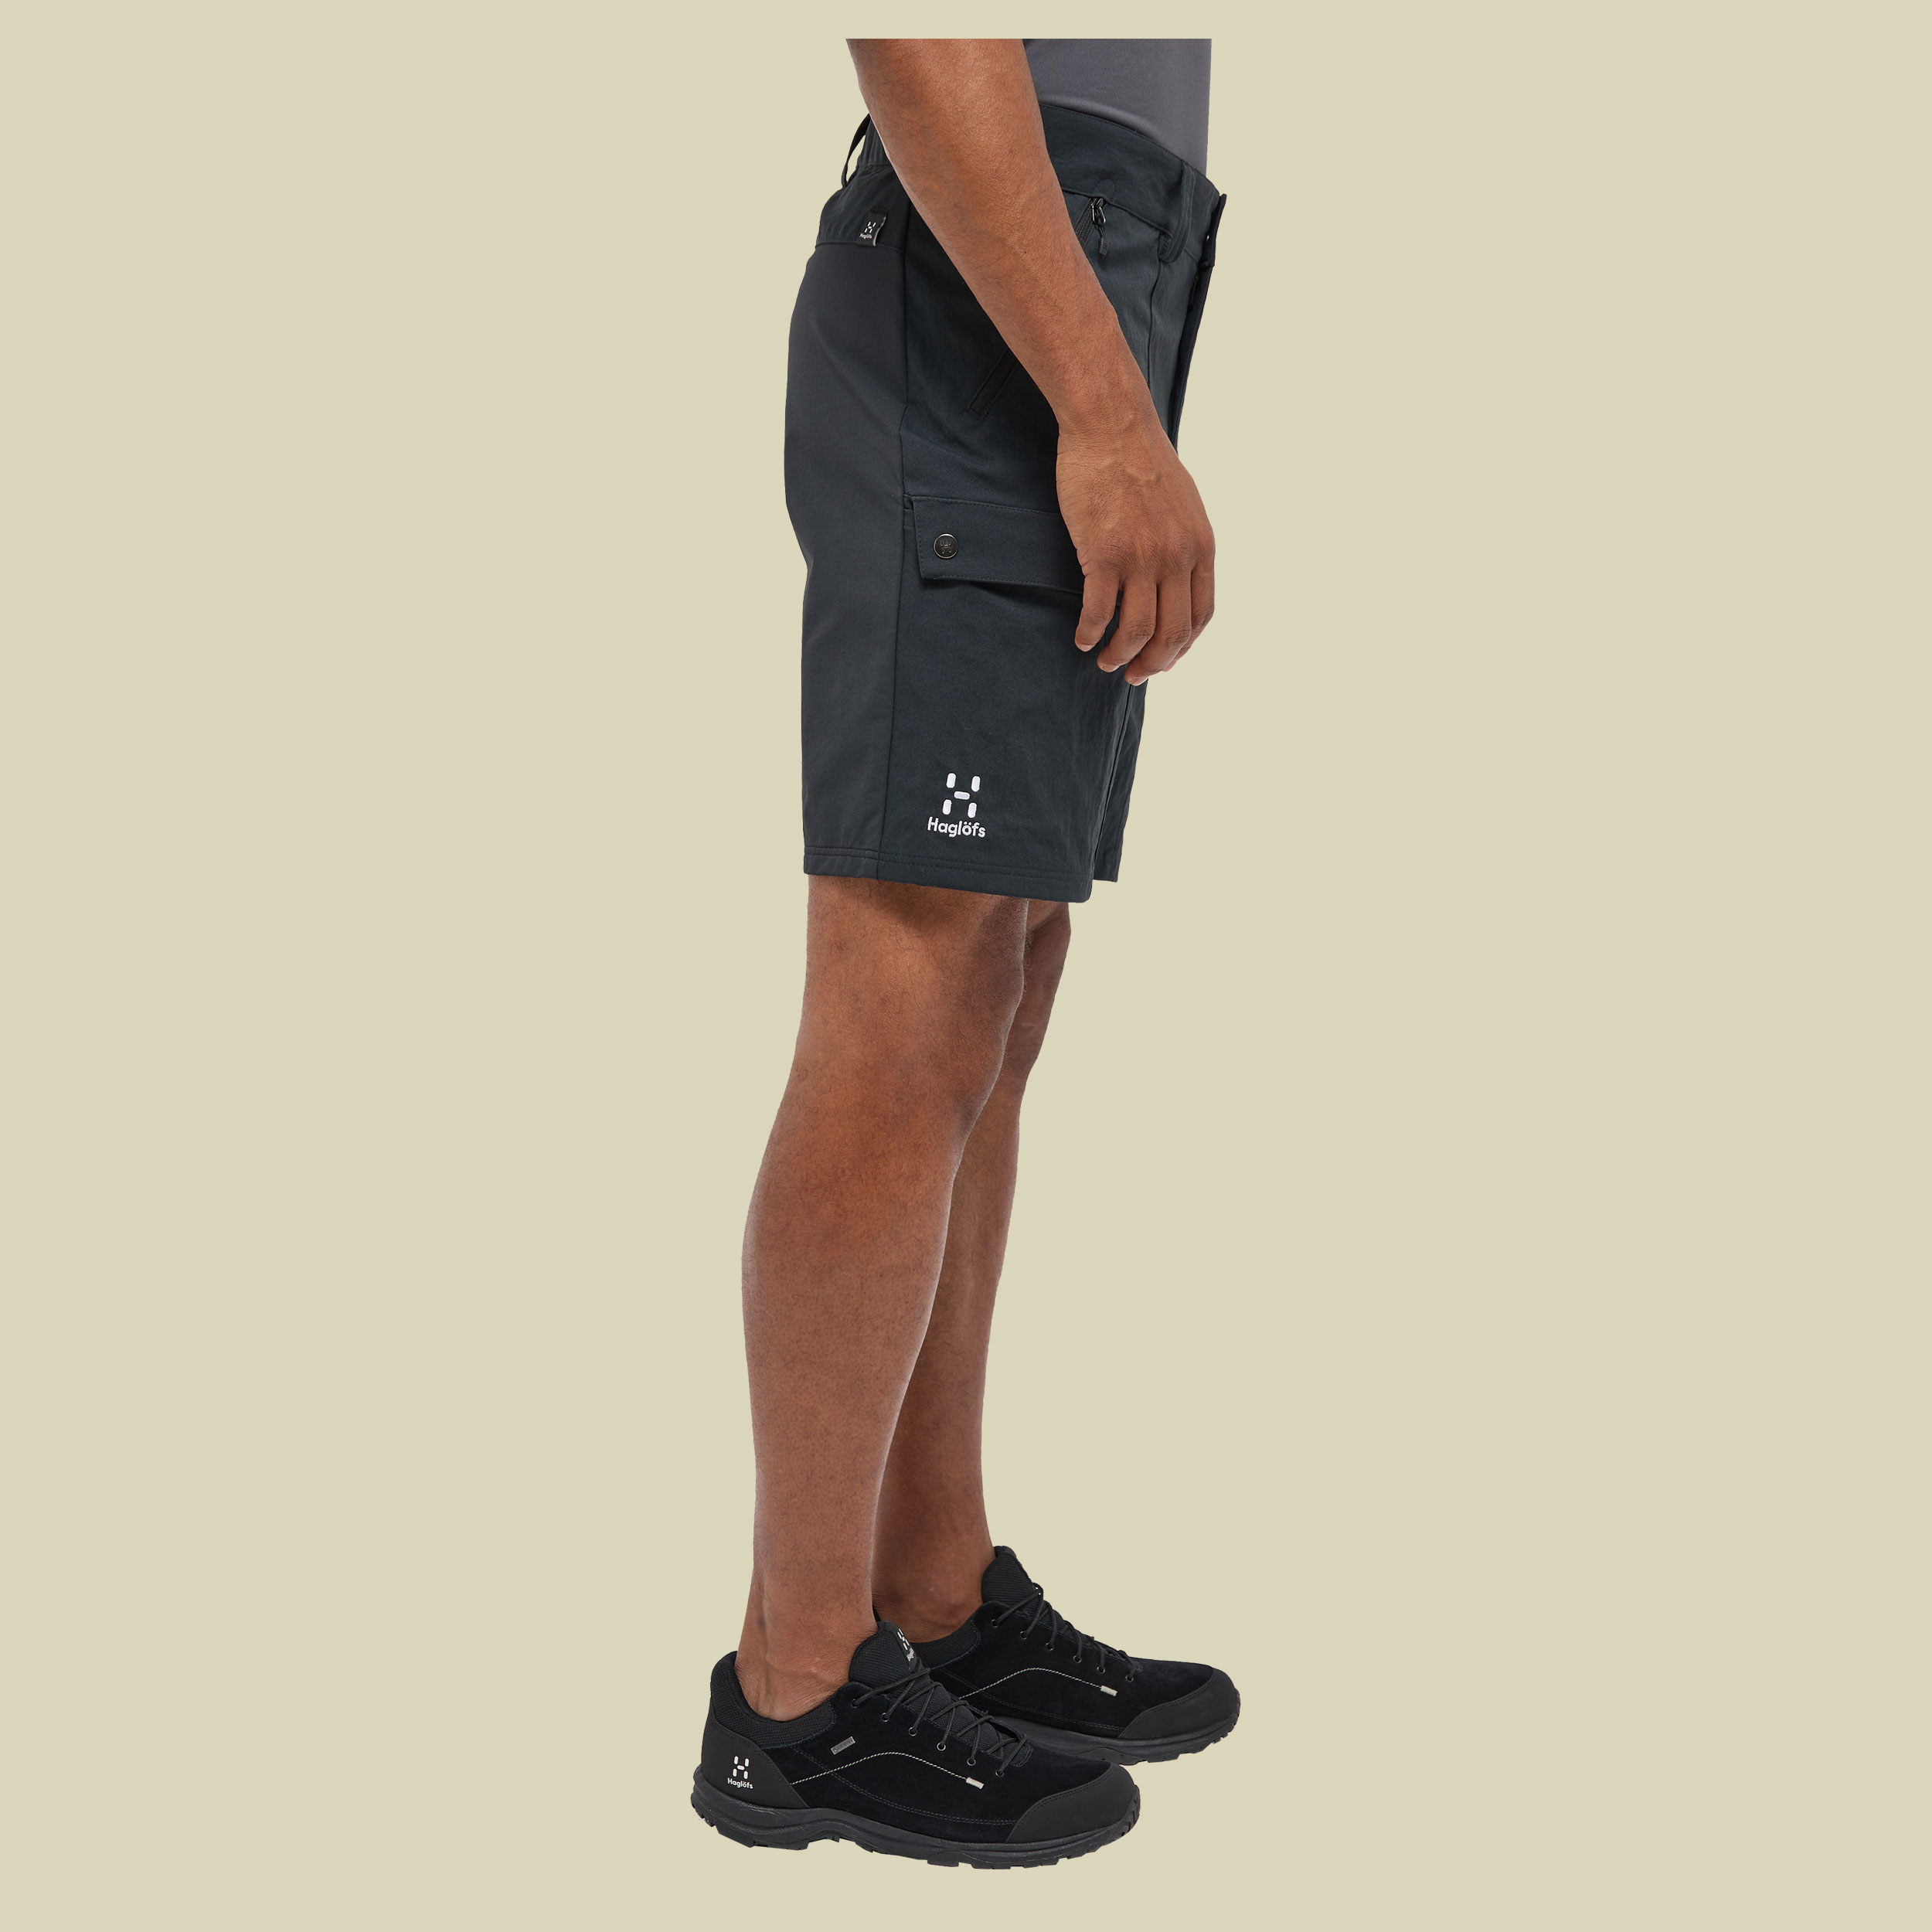 Mid Standard Shorts Men 54 schwarz - true black